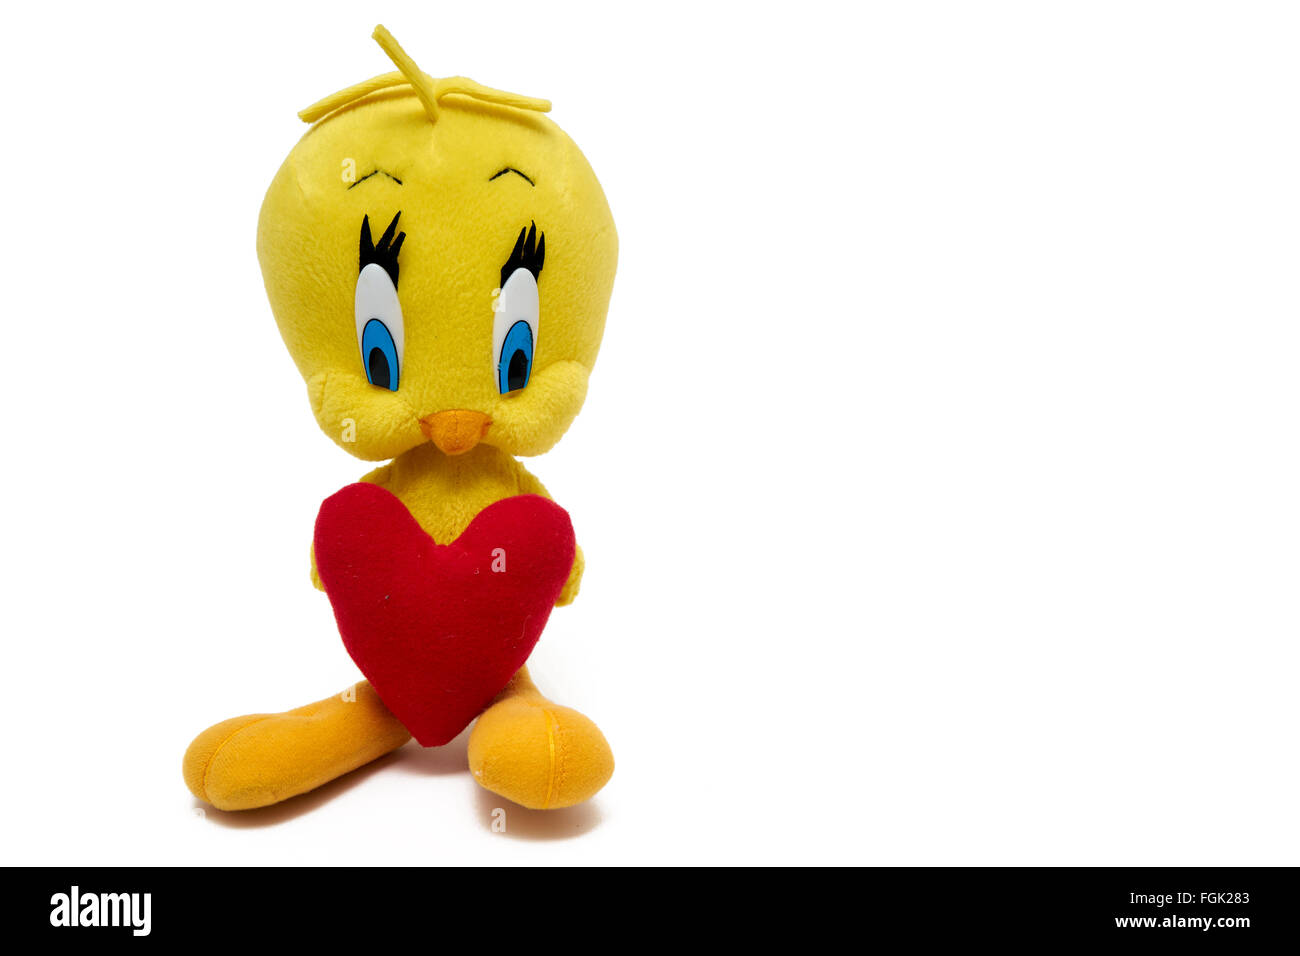 Alexandroupoli, Greece - February 7, 2016 : Tweety Bird figure toy character from Looney Tunes cartoons. Stock Photo